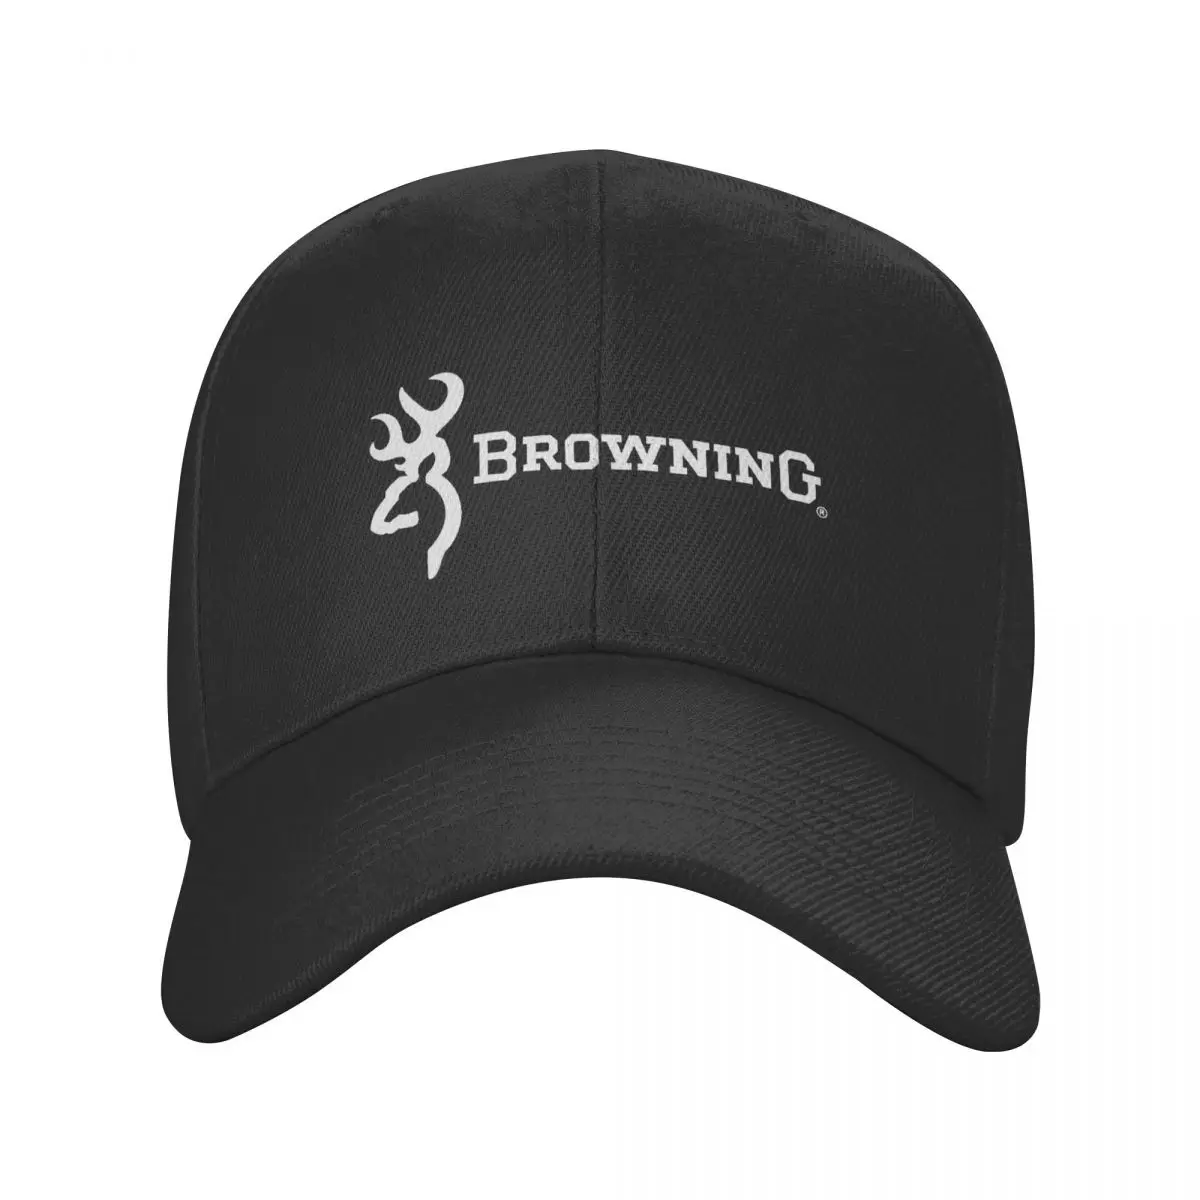 

New Browning Baseball Cap Sun Protection Women Men's Adjustable Dad Hat Spring